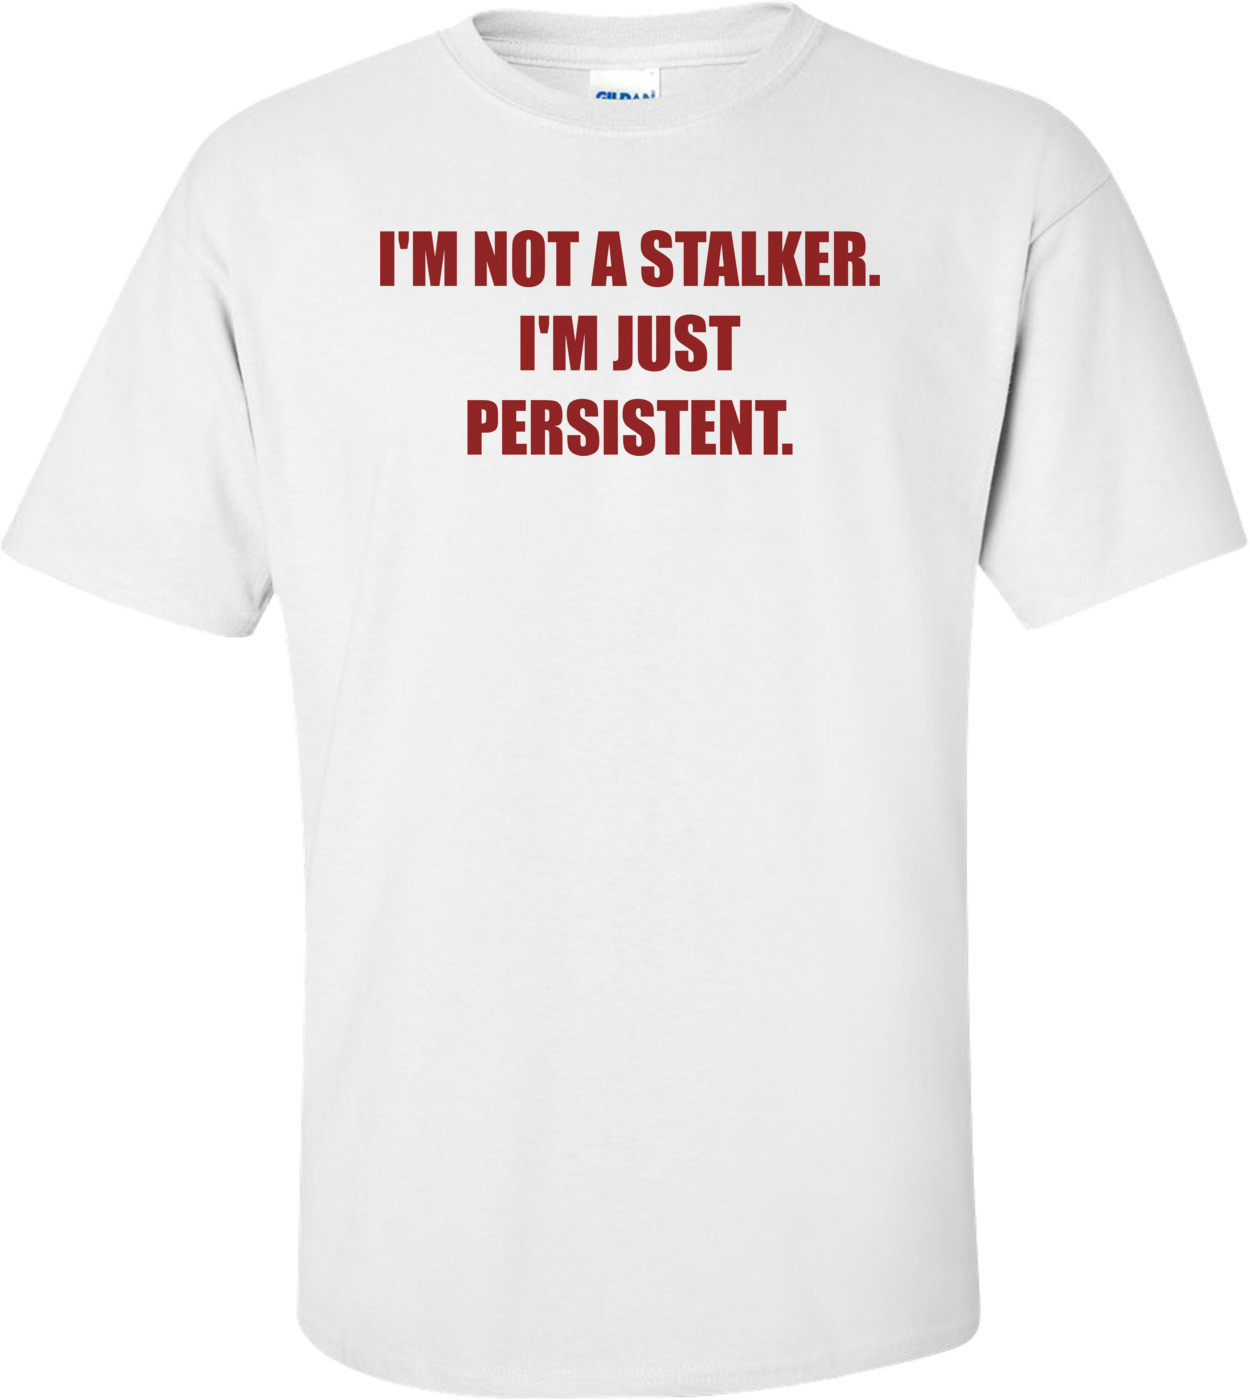 I'M NOT A STALKER. I'M JUST PERSISTENT. Shirt